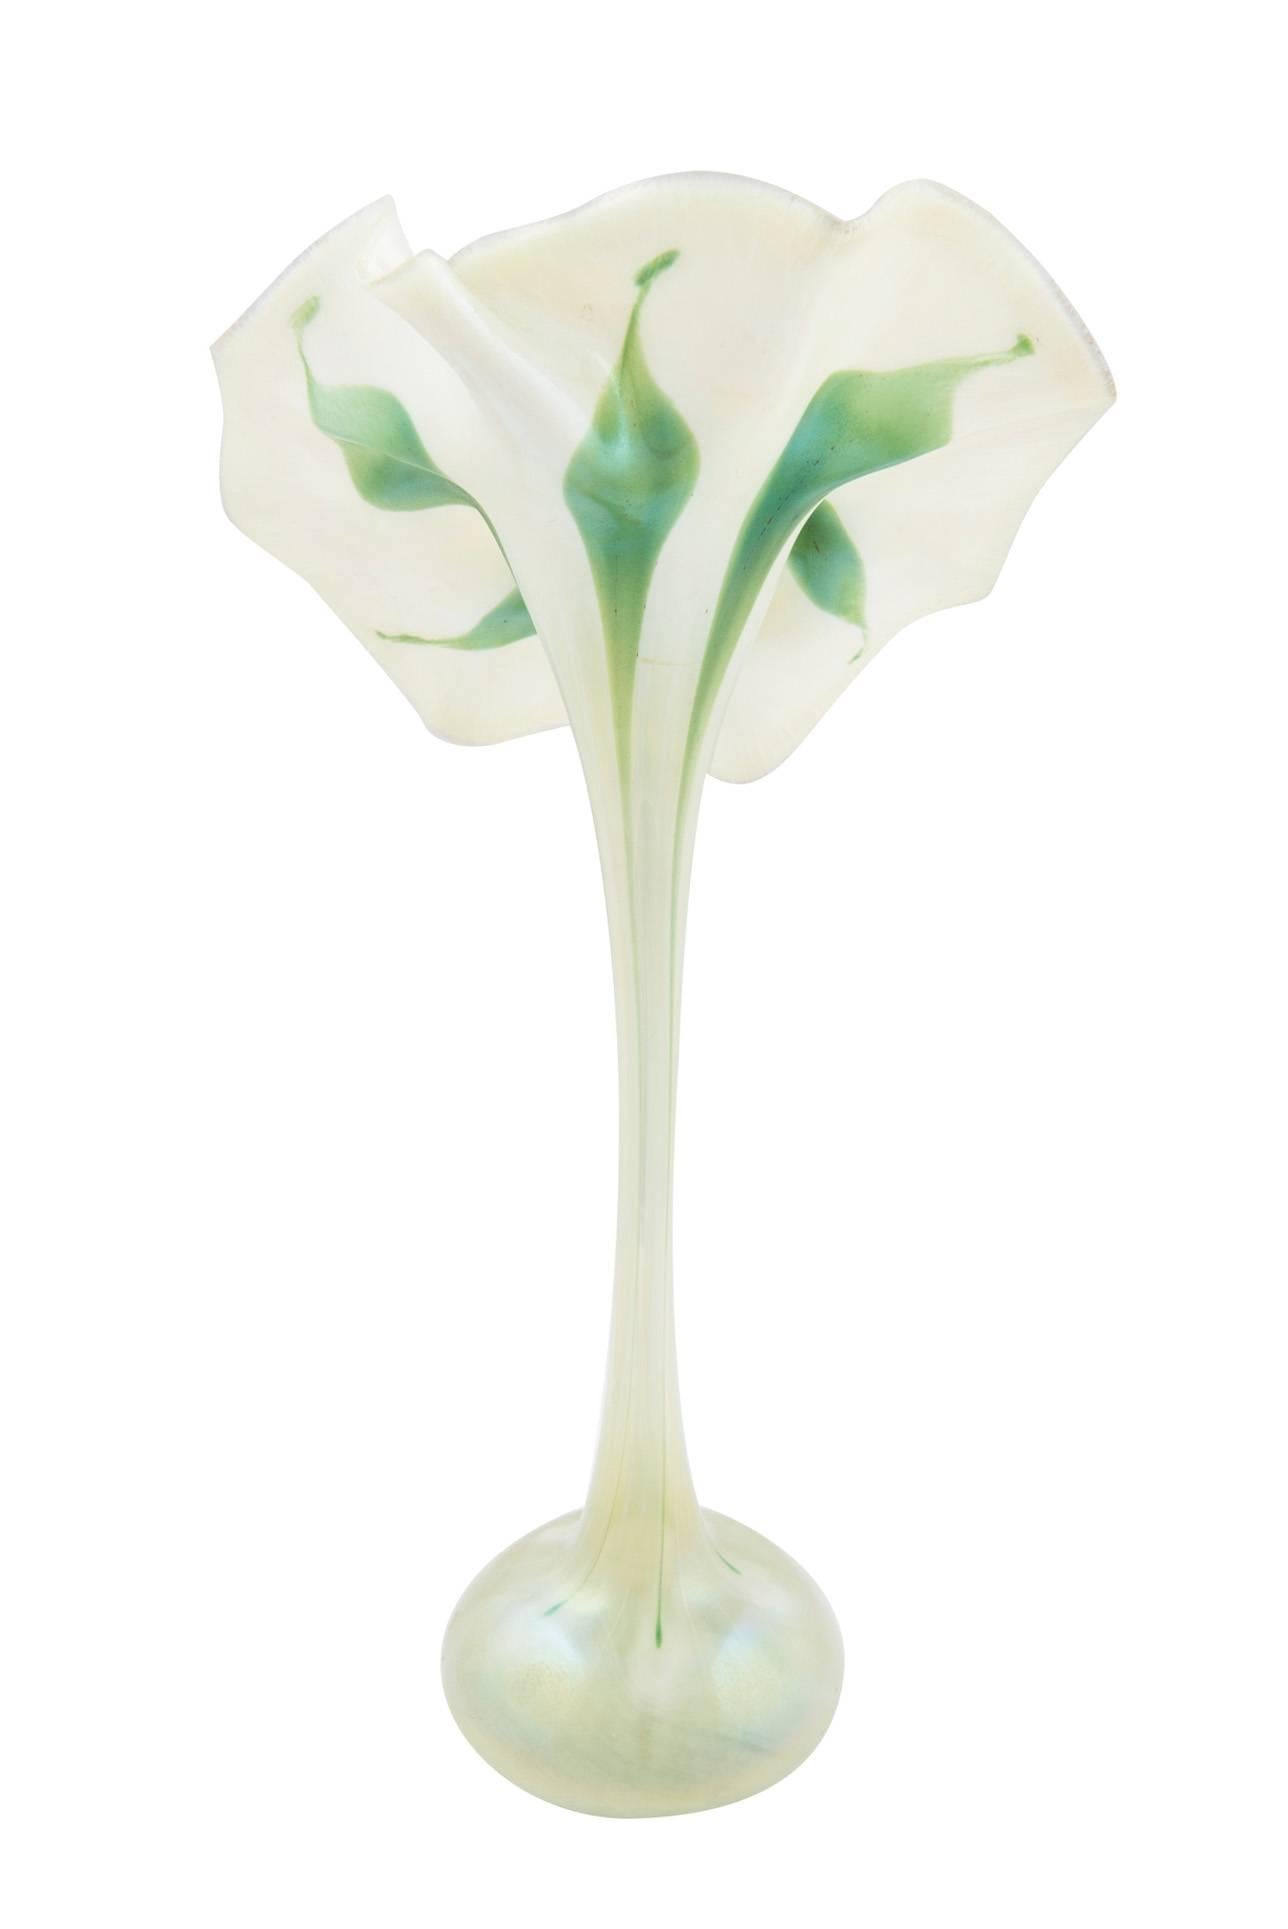 Art Deco Tiffany Studios Glass New York Jack-in-the-pulpit Vase 1905 L.C. Tiffany Favrile